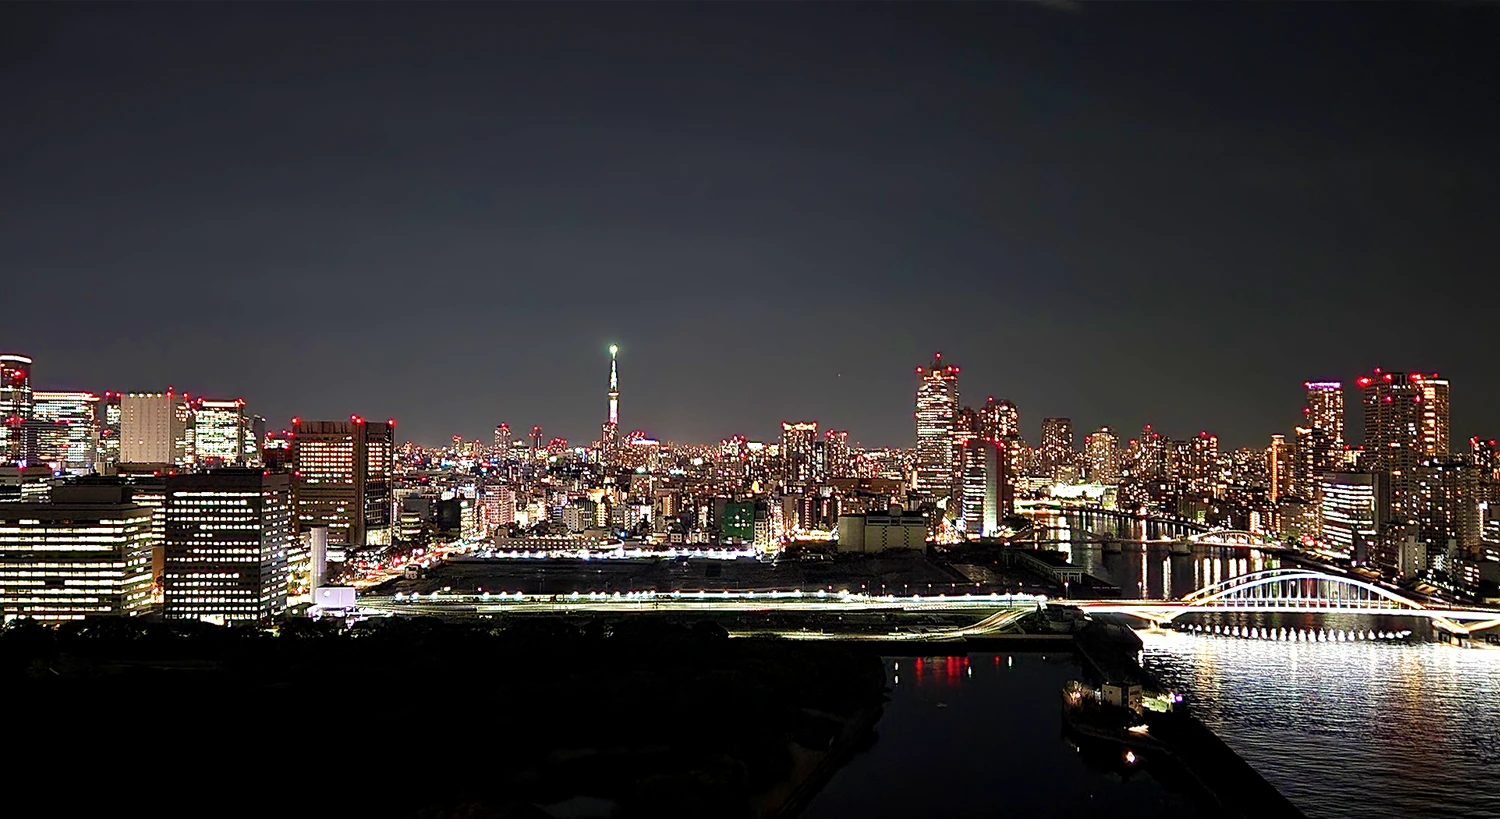 Tokyo SKYTREE and the Sumida River beyond